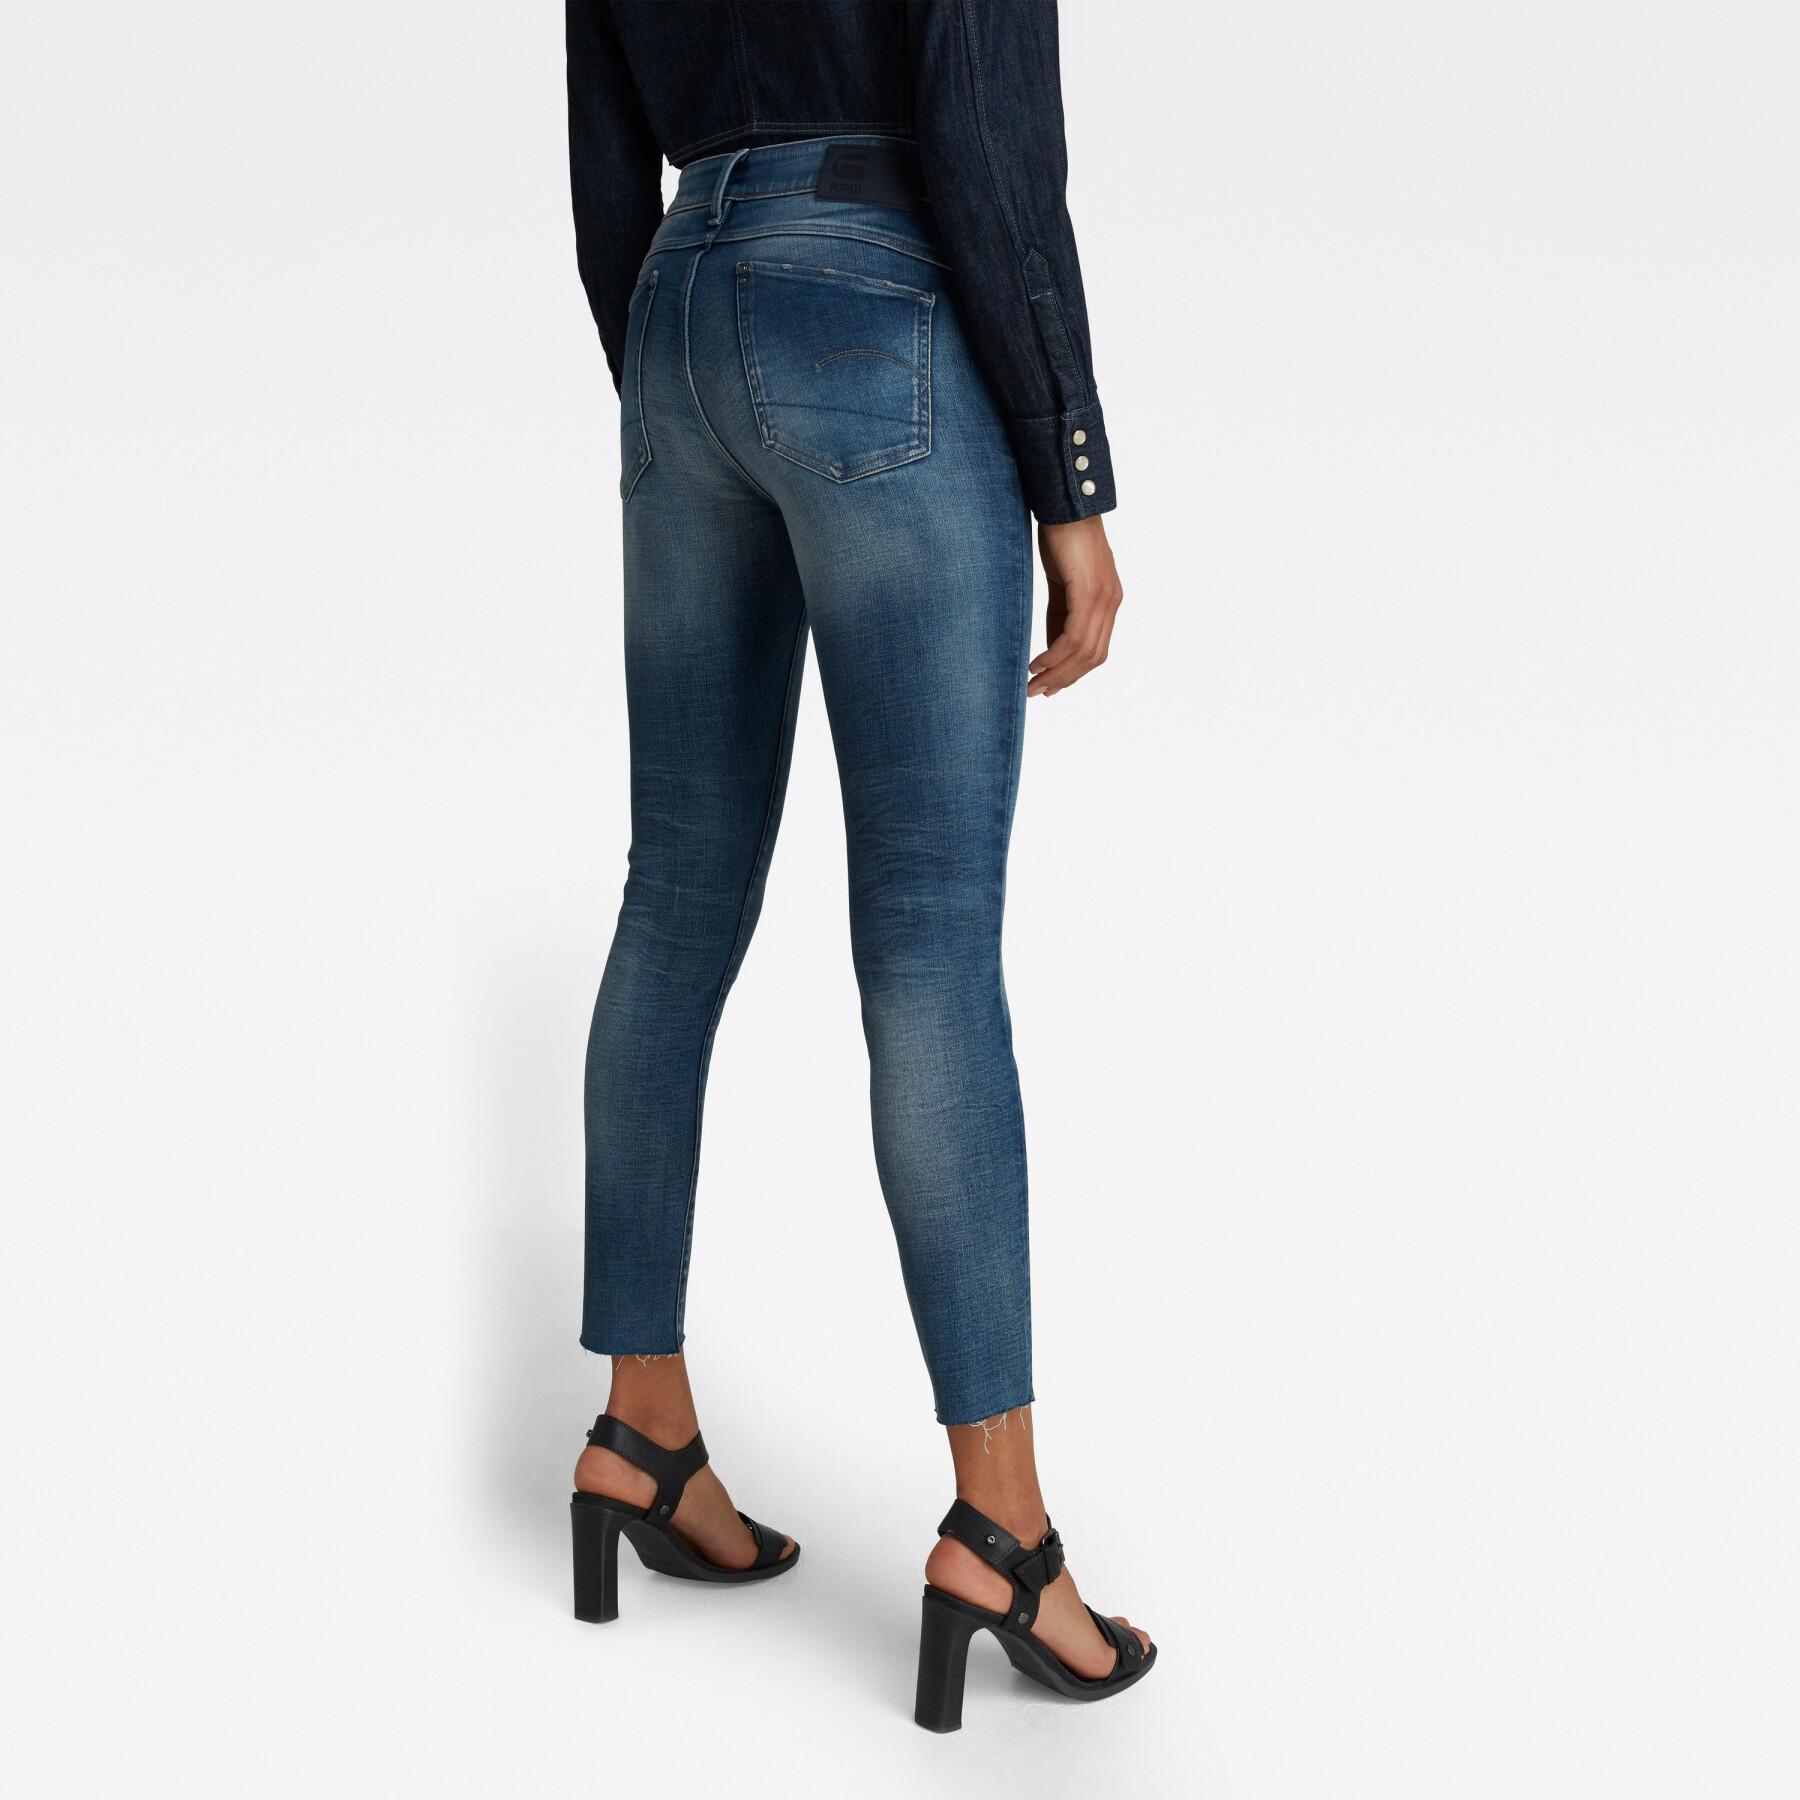 Jeans skinny femme G-Star Lhana Ankle